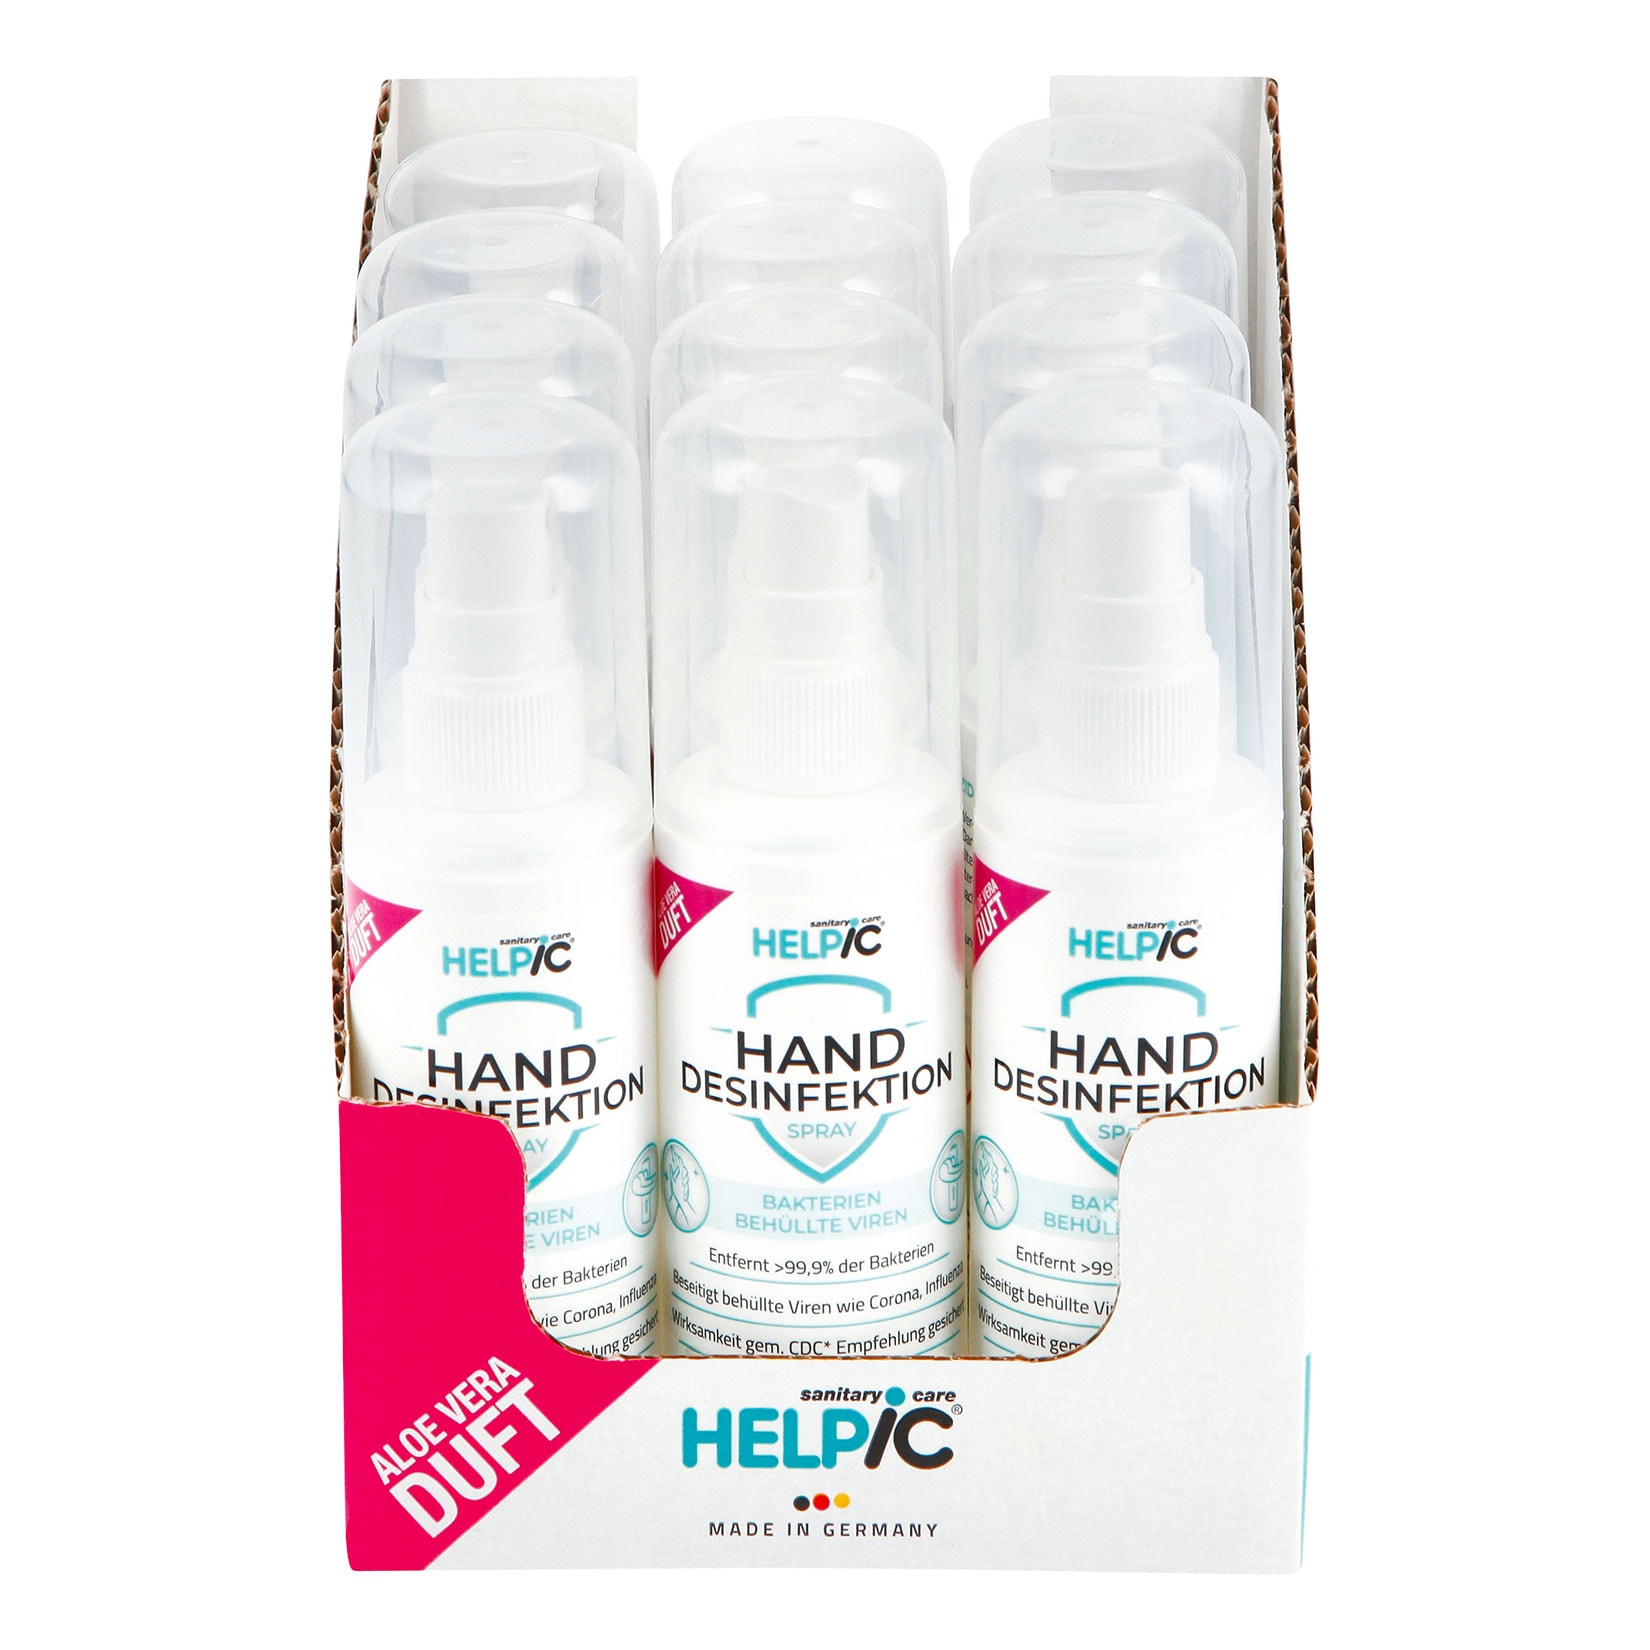 Helpic Hand Desinfektionsspray 100 ml, 12er Pack